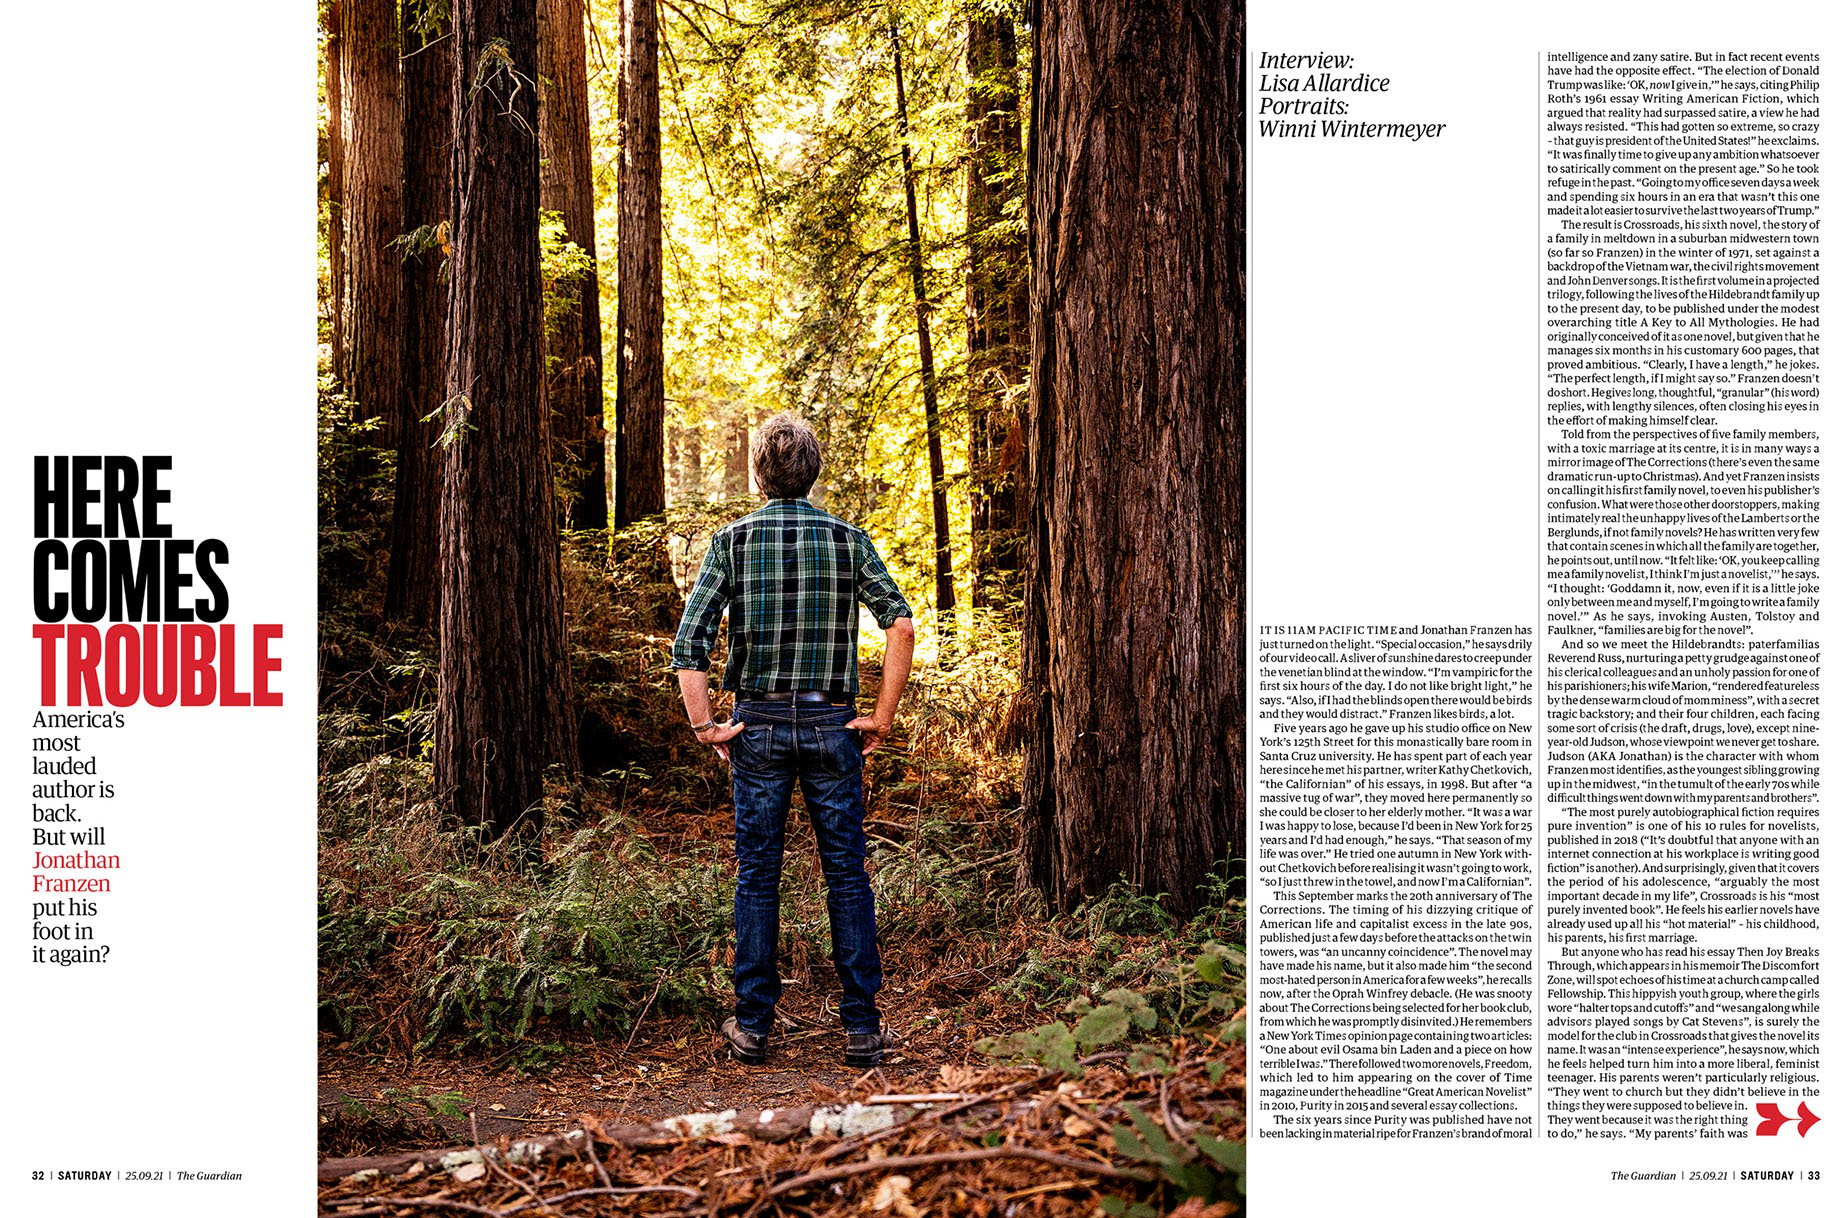 Tearsheets of author Jonathan Franazen shot by Winni Wintermeyer for Saturday magazine.